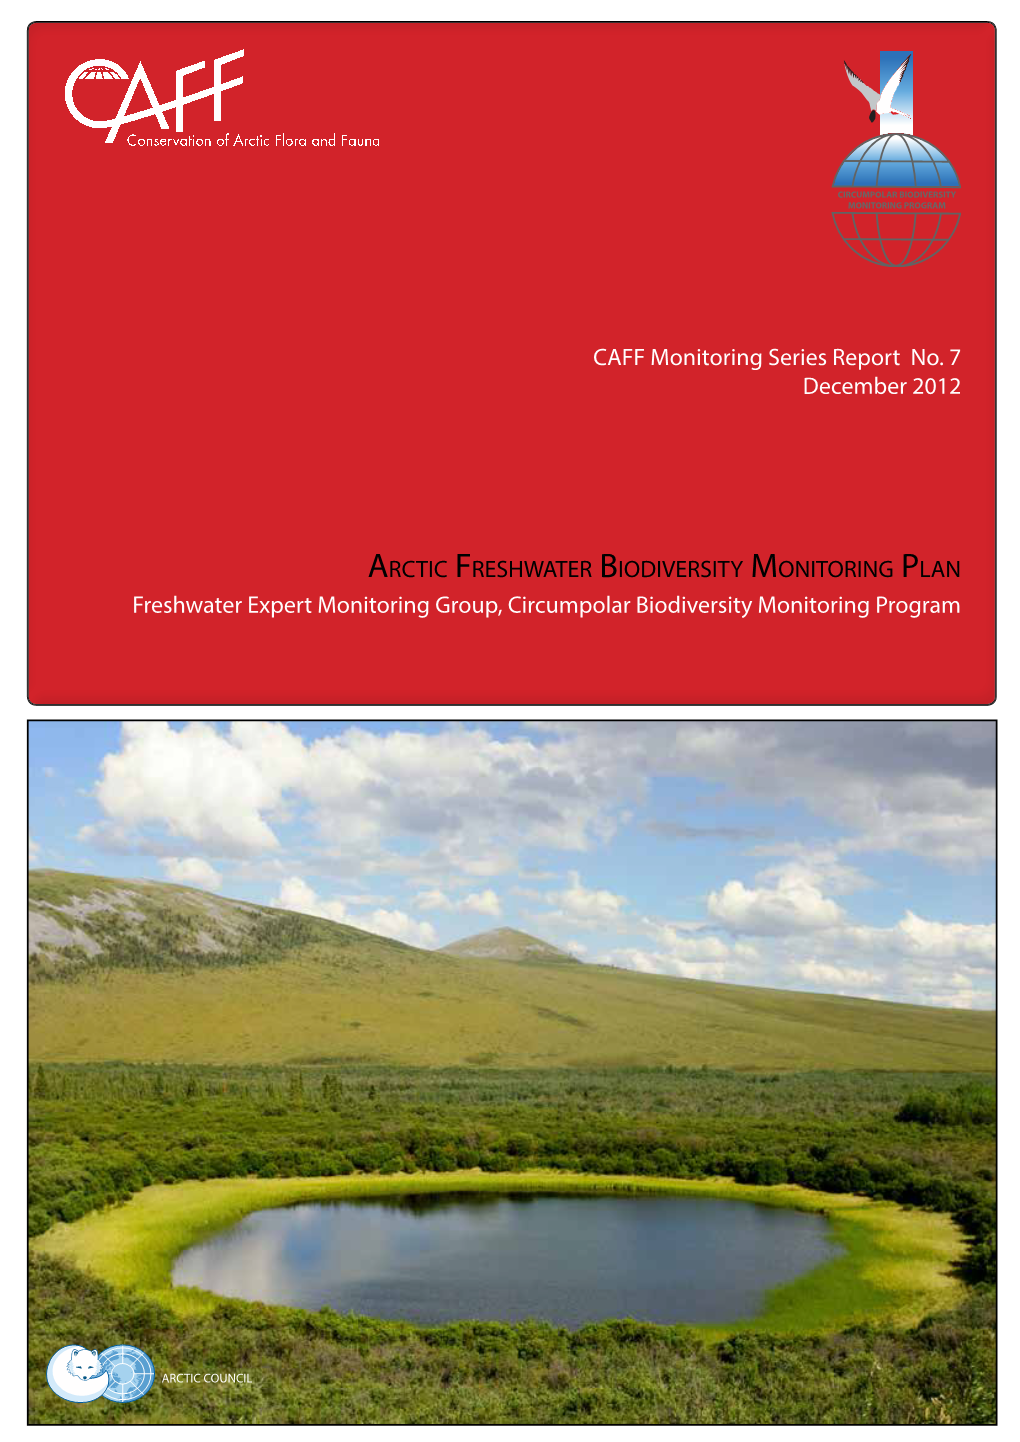 1.2 Background on the Arctic Freshwater Biodiversity Monitoring Plan